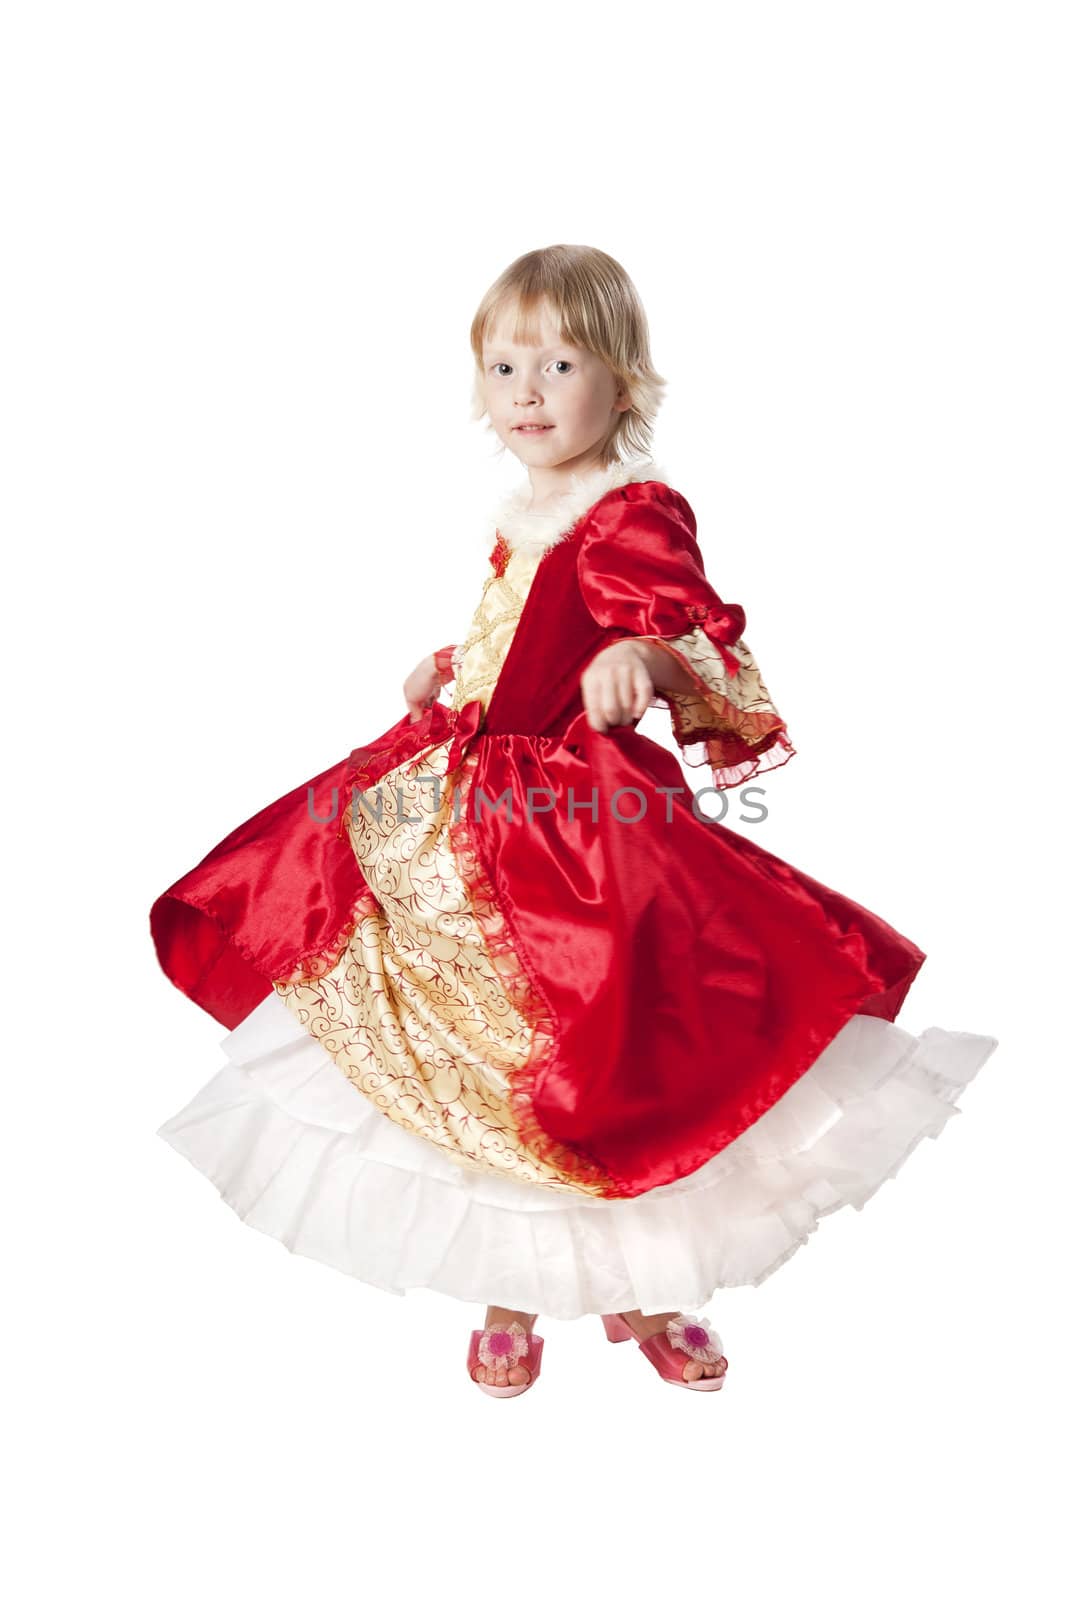 Little girl dressed like a pretty princess